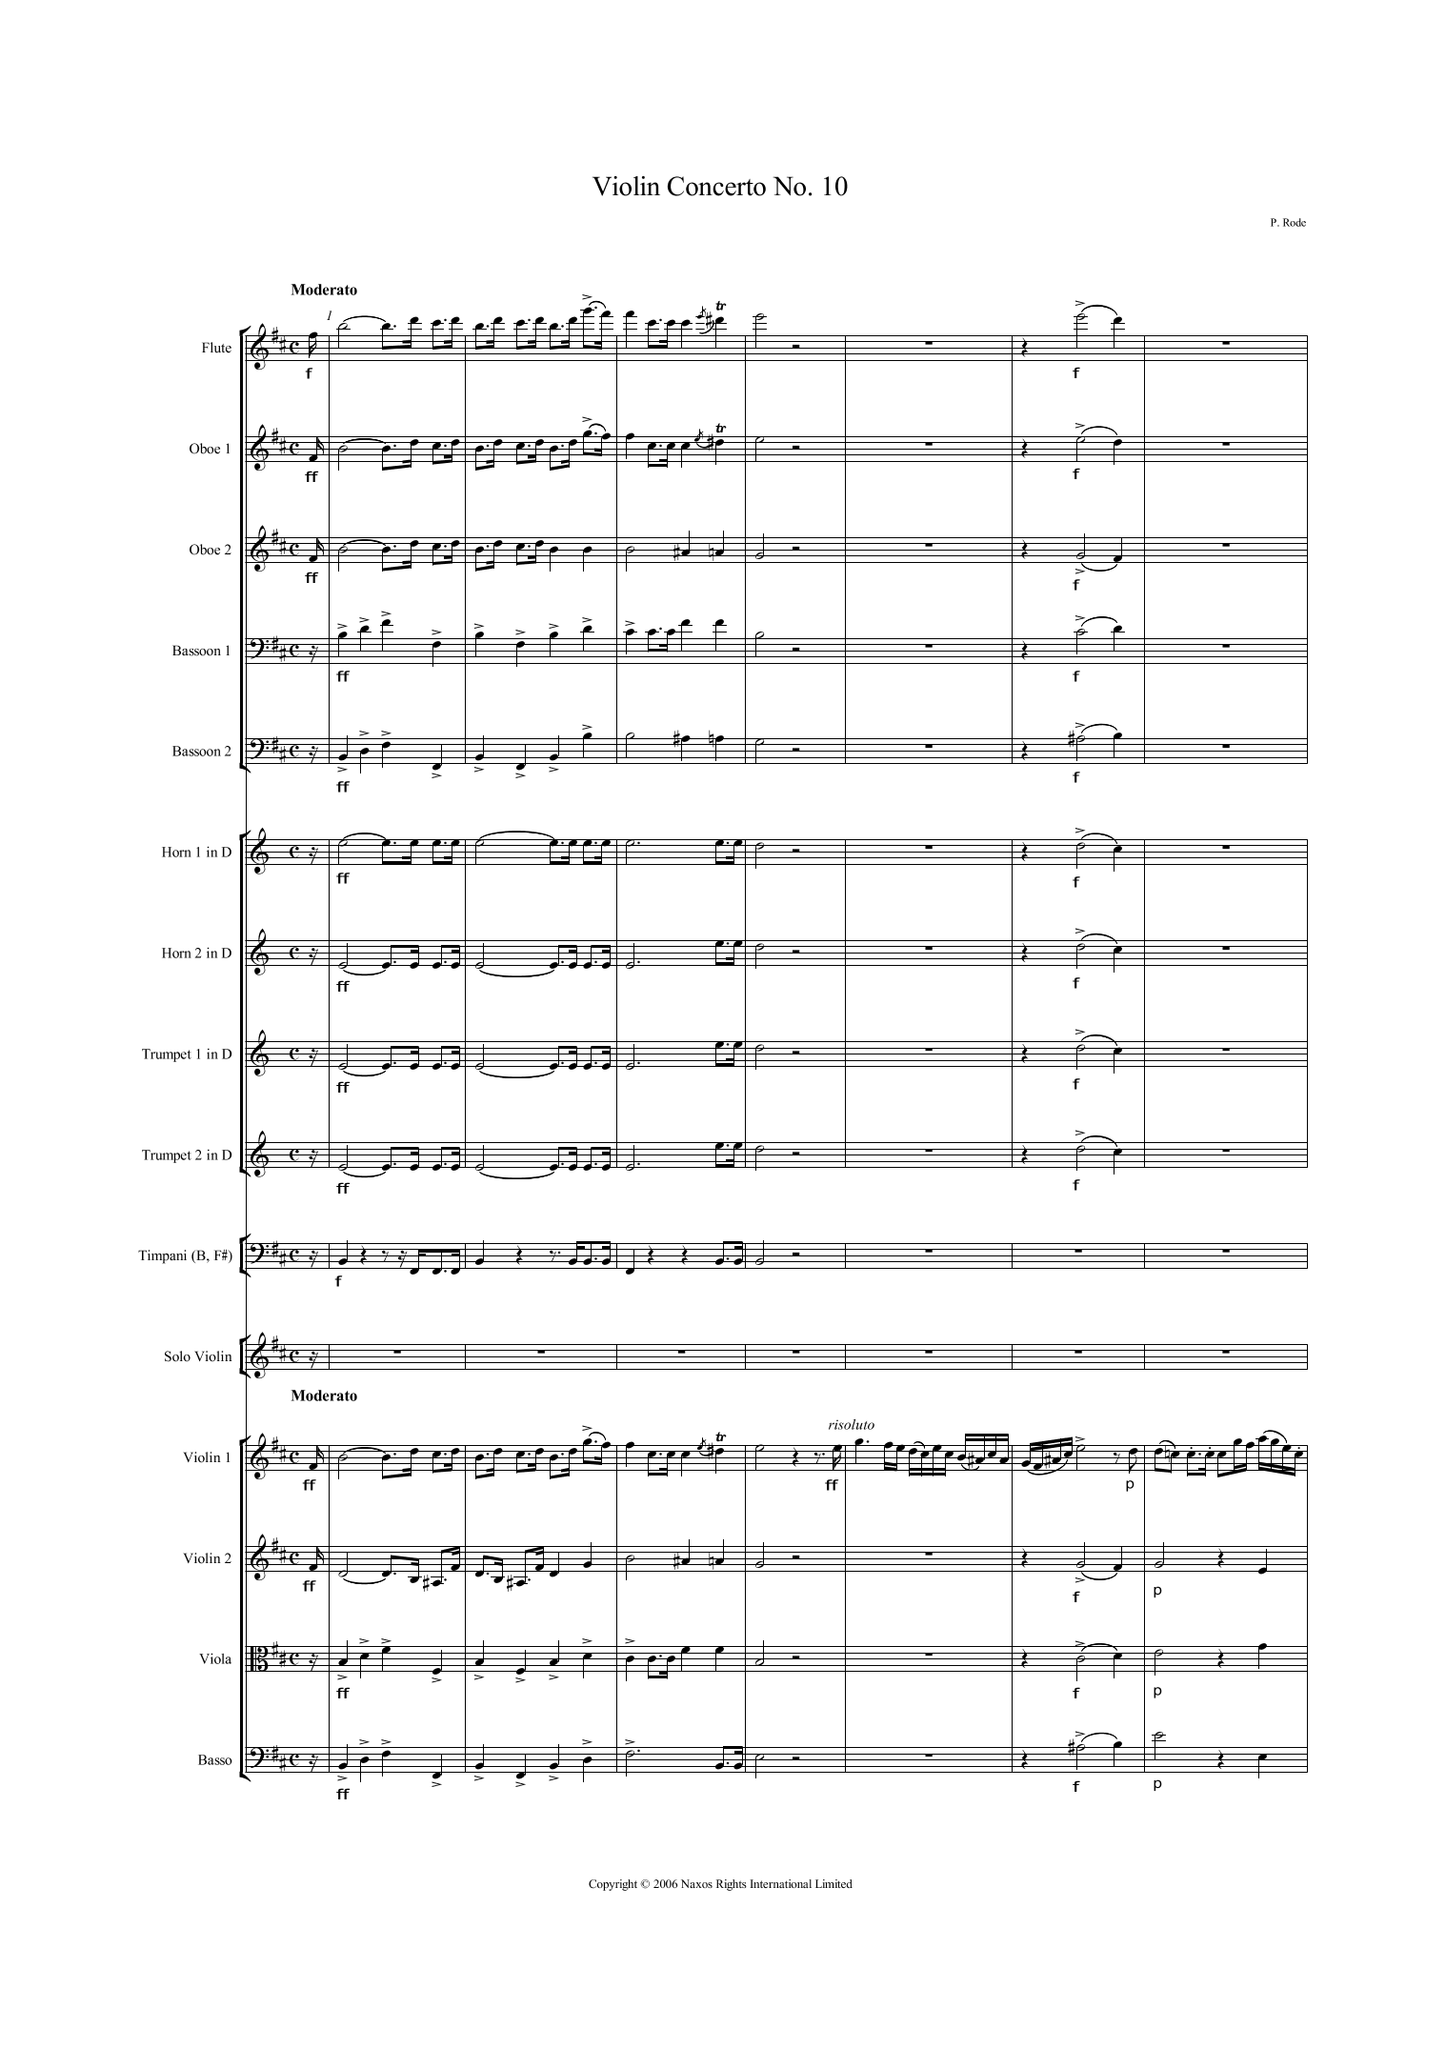 Pierre, Rode: Violin Concerto No. 10 in B Minor, Op. 19 (Rode010)